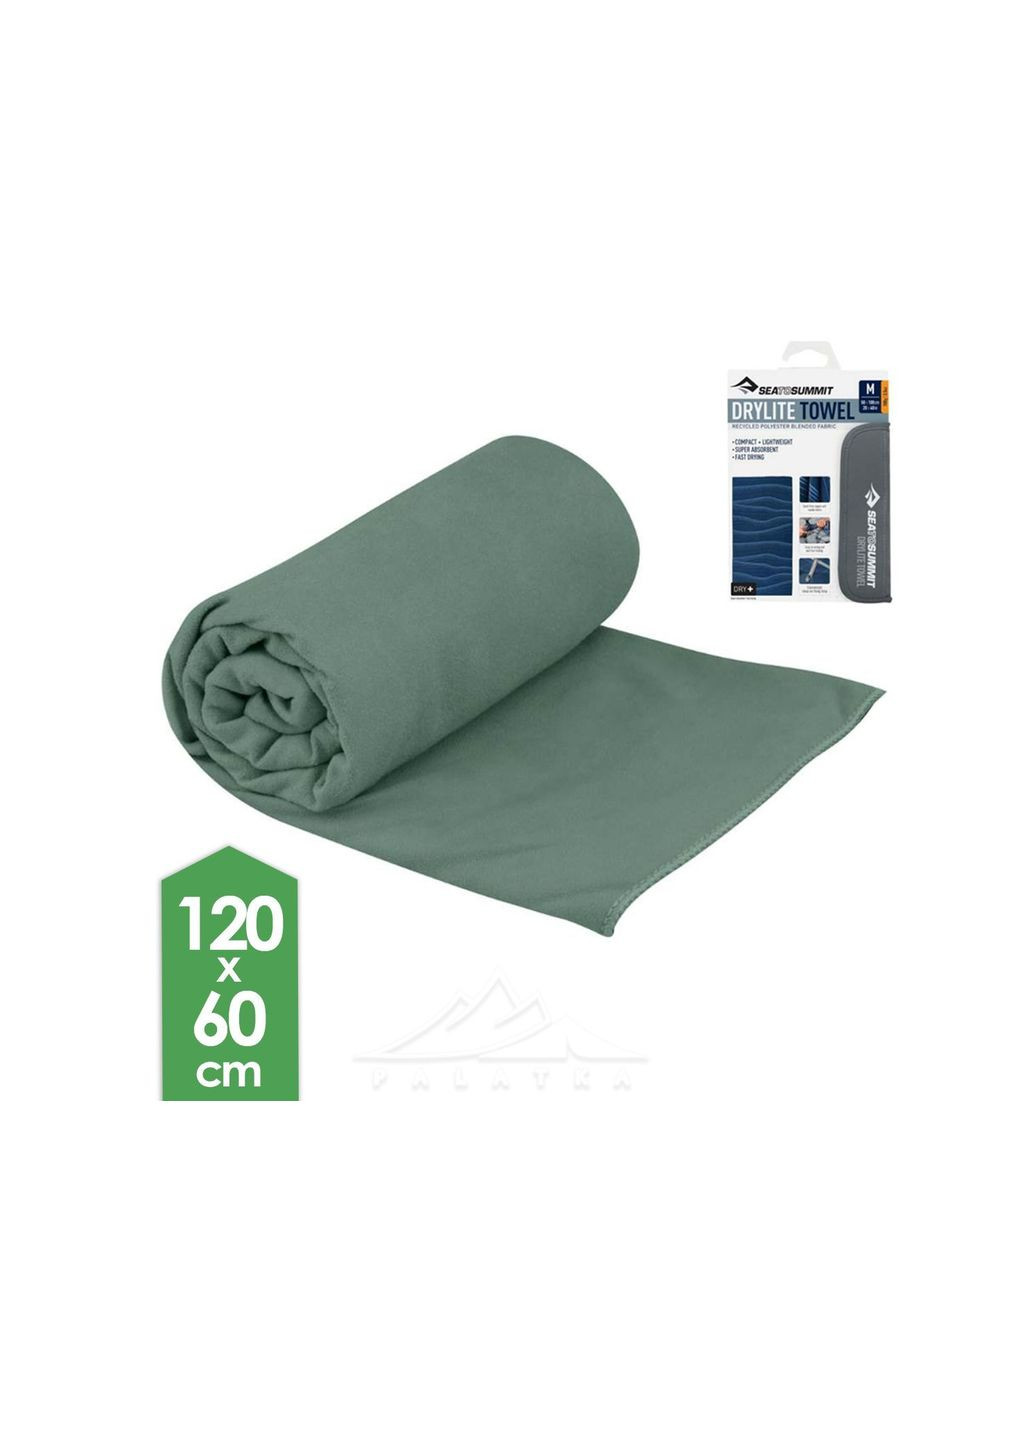 Sea To Summit полотенце drylite towel l серыйзеленый комбинированный производство -